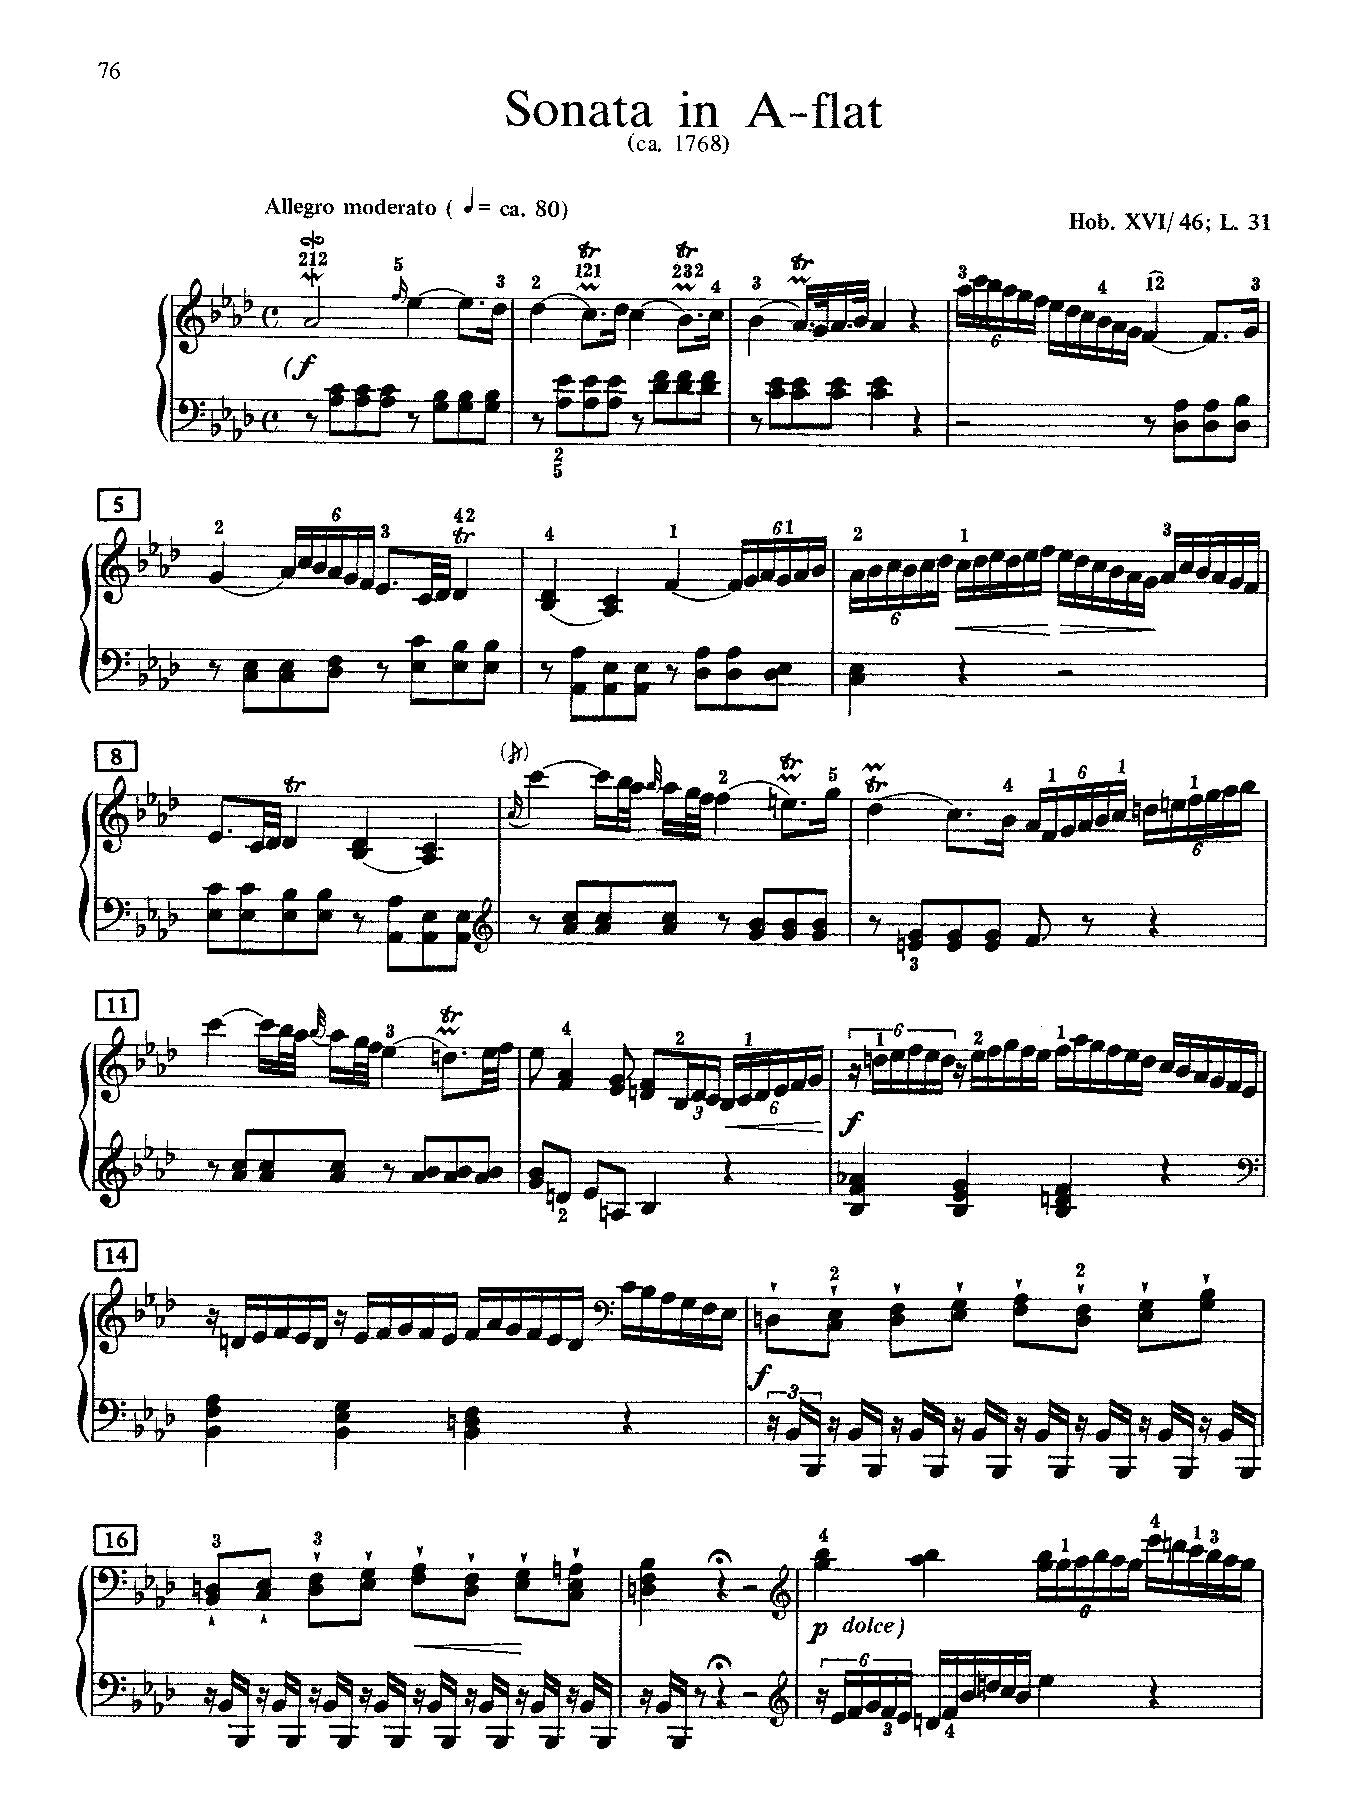 Haydn: The Complete Piano Sonatas, Volume 3